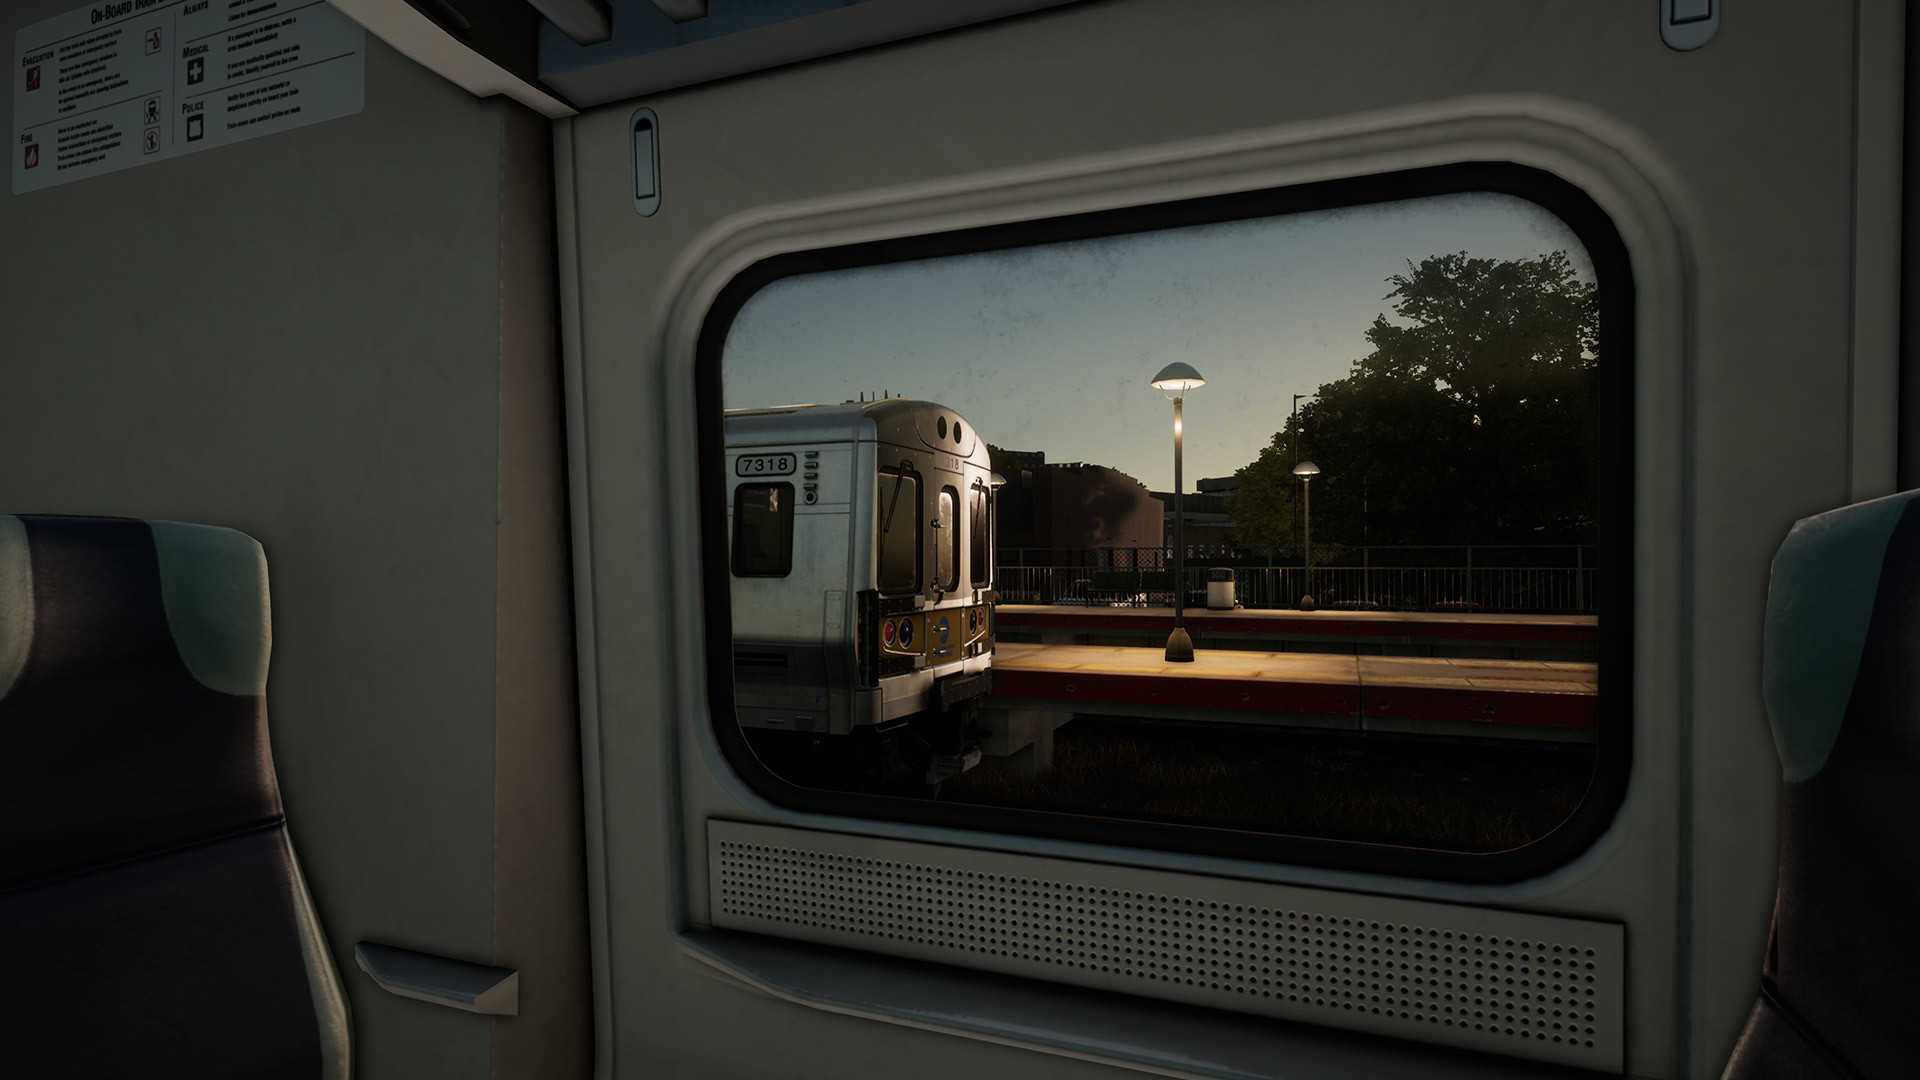 Train Sim World 2: Long Island Rail Road: New York - Hicksville Route Add-On DLC Steam CD Key 5.63 usd